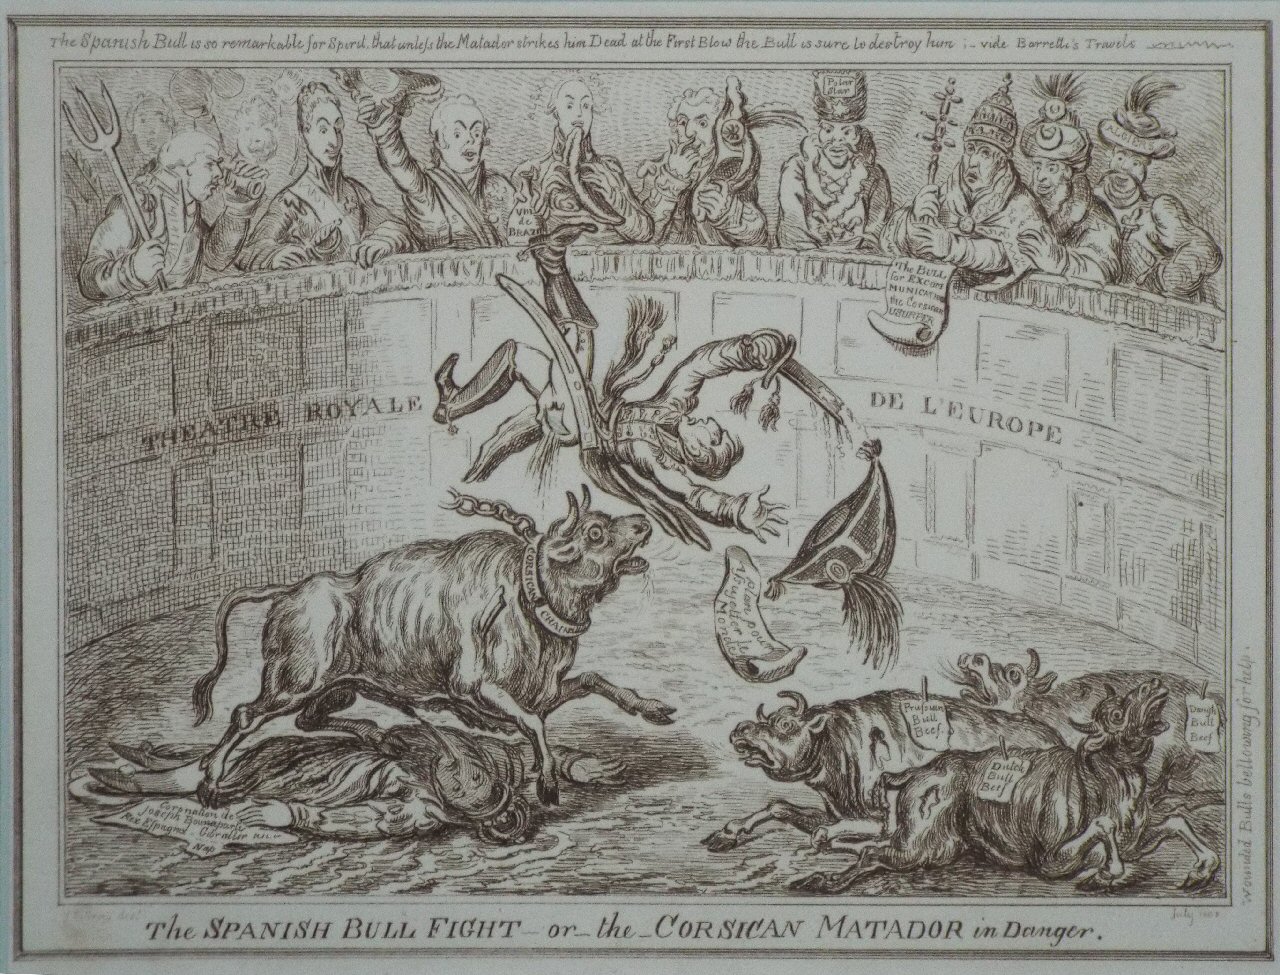 Aquatint - The Spanish Bull Fight or the Corsican Matador in Danger.